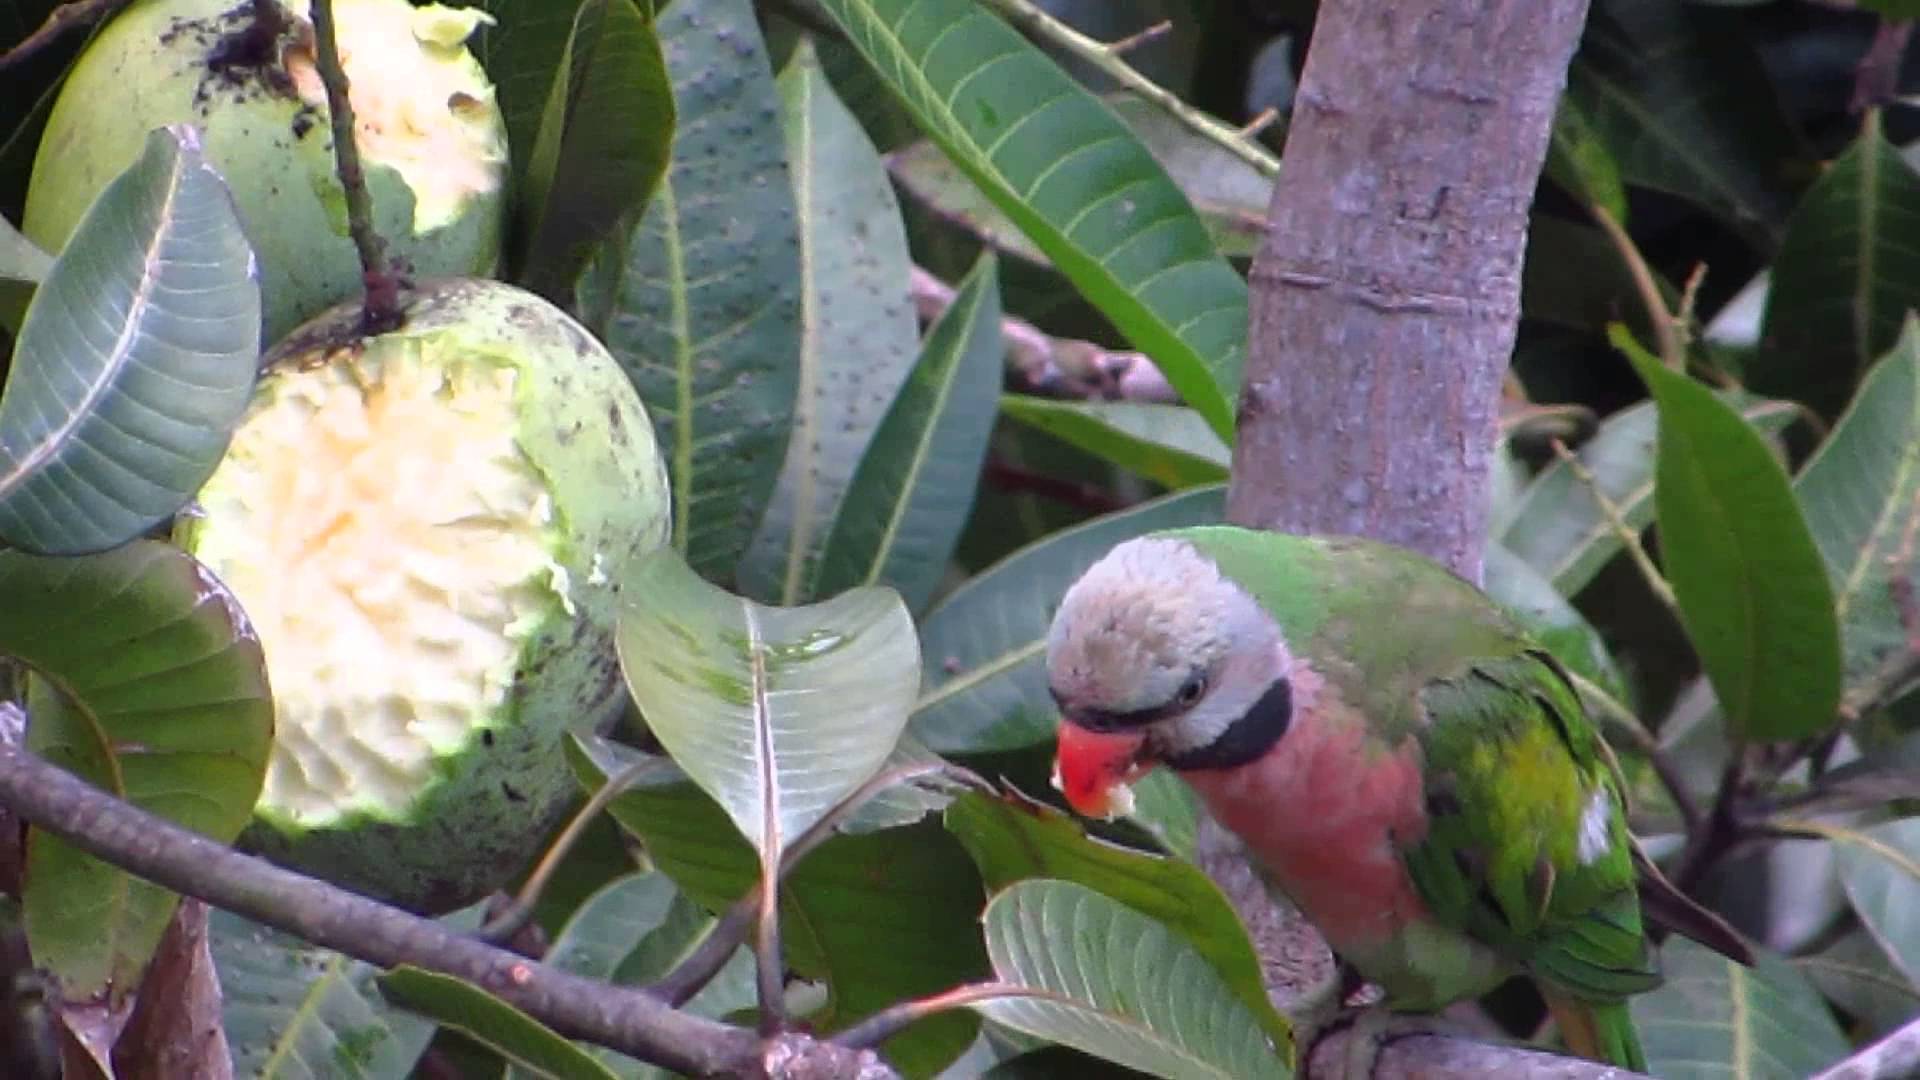 Parrots found eating mango - YouTube